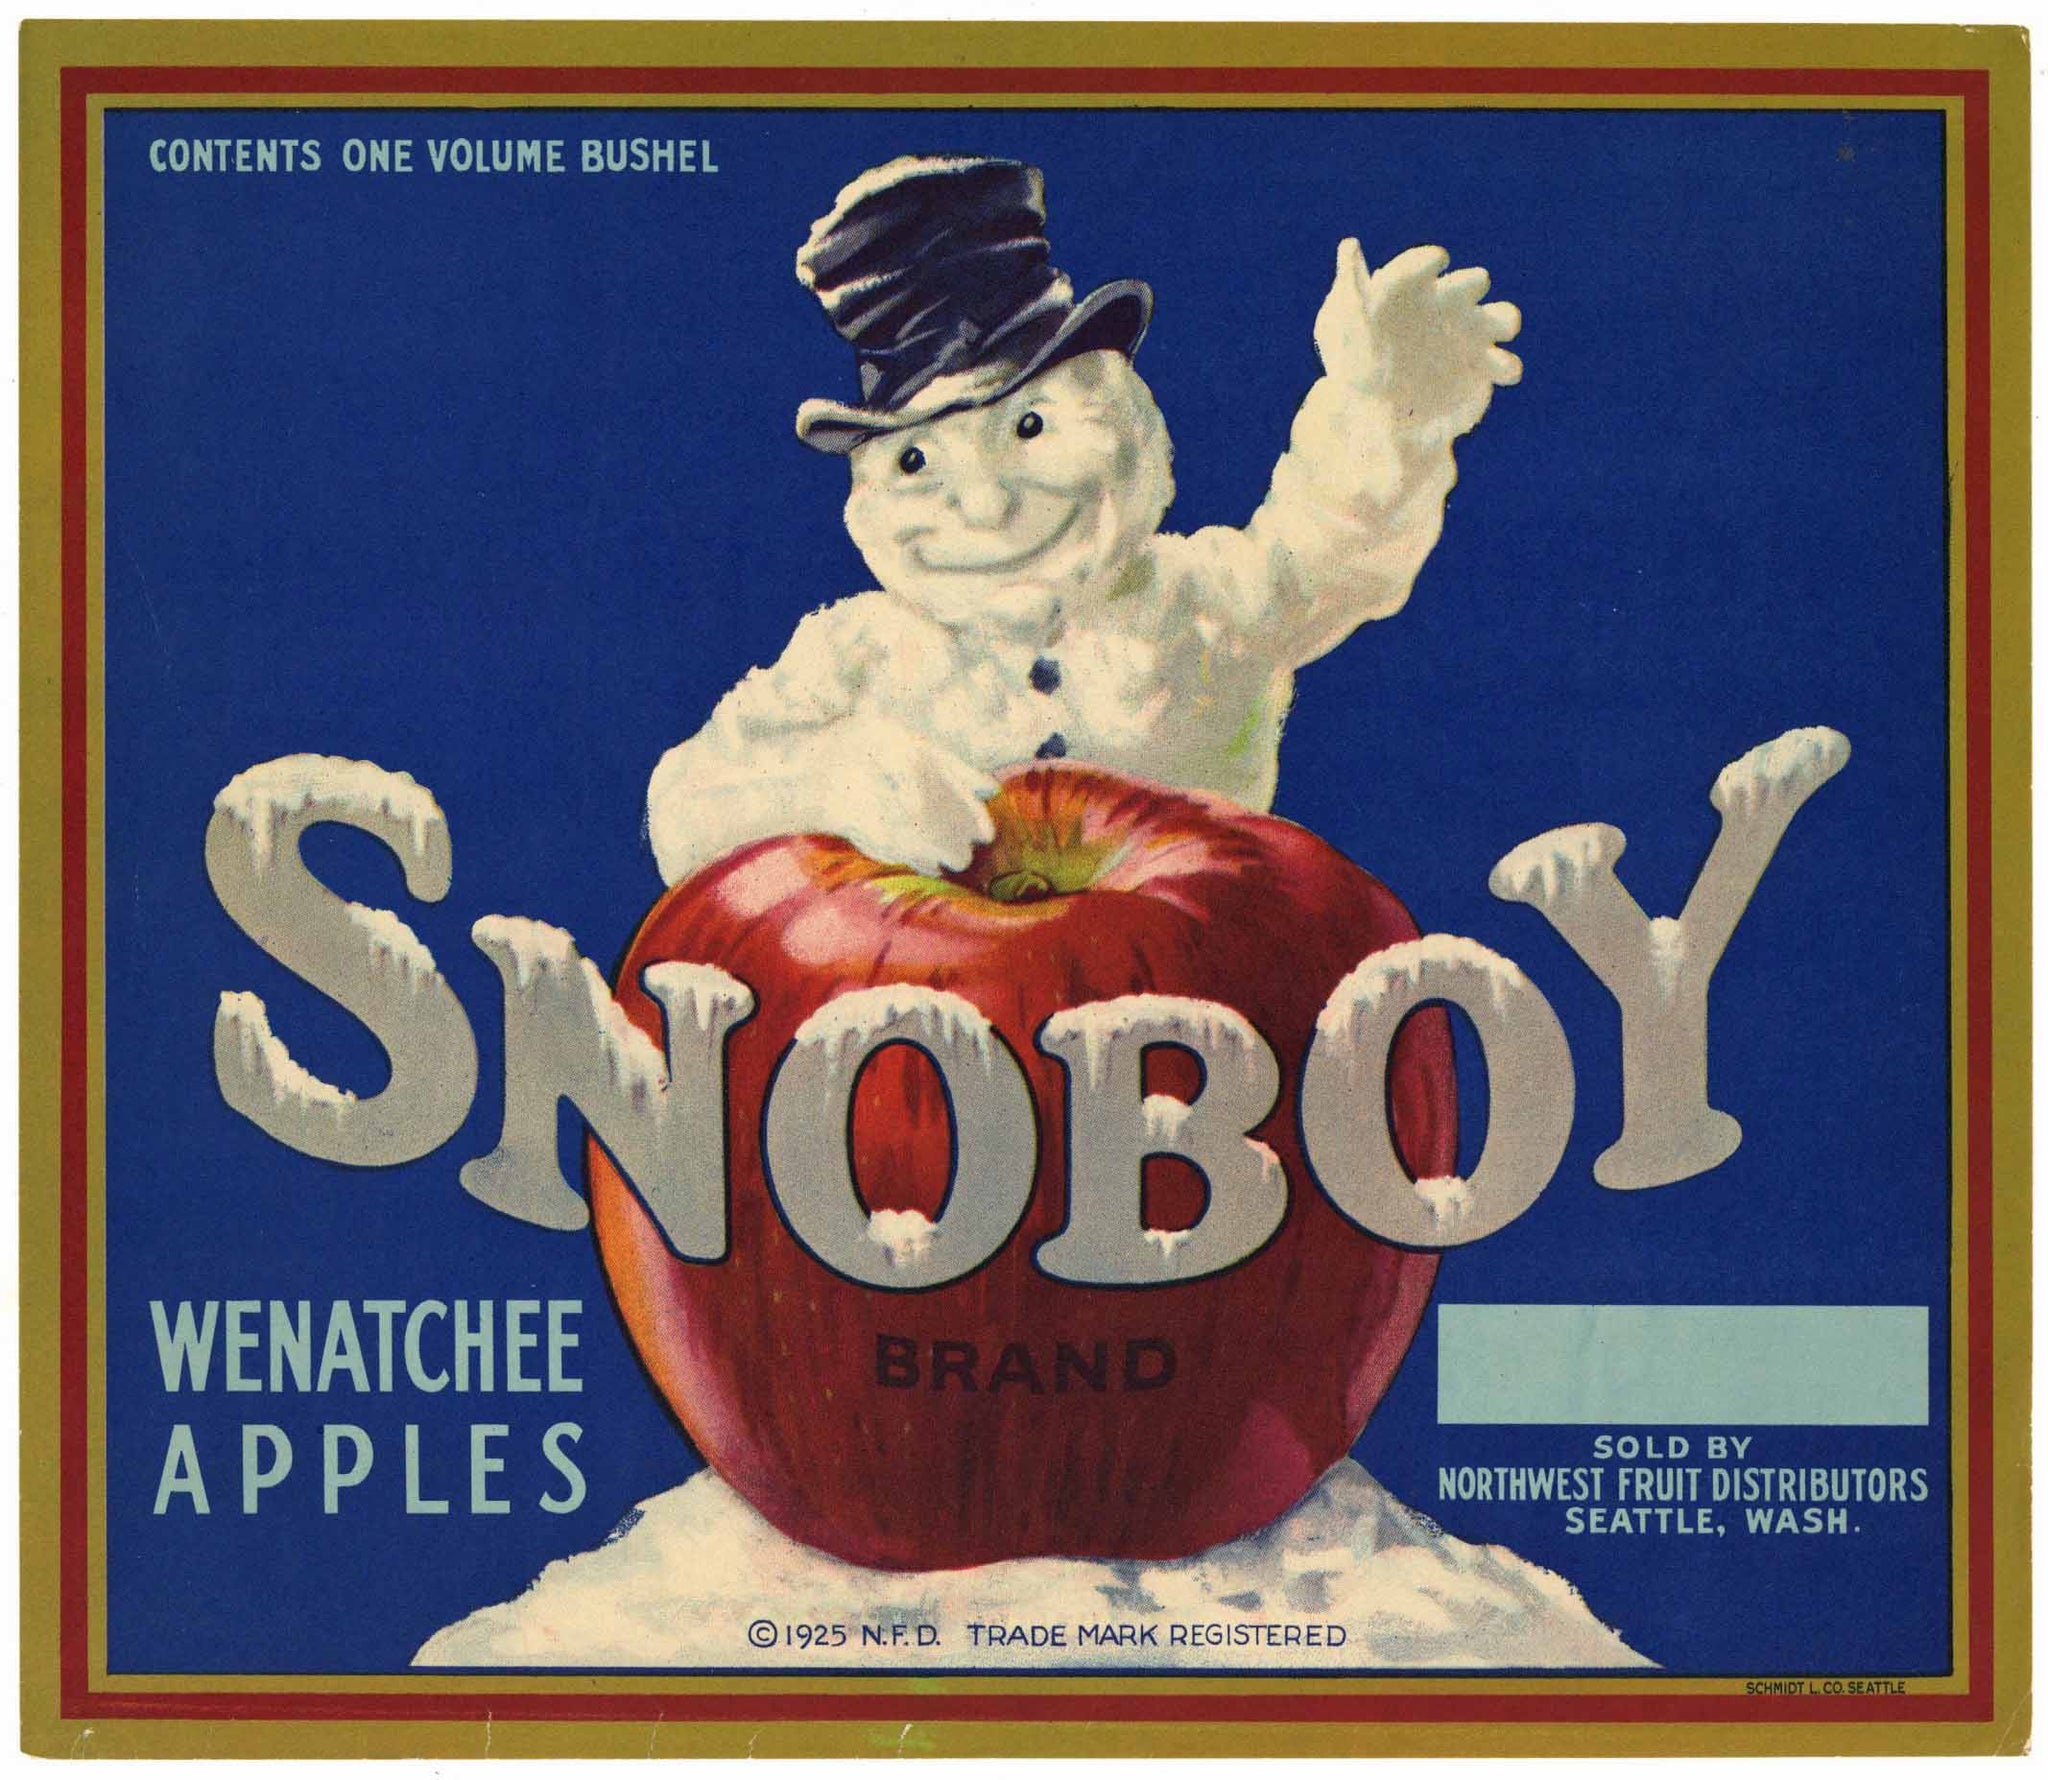 Snoboy Brand Vintage Pacific Fruit Apple Crate Label, 'Wenatchee Apples'